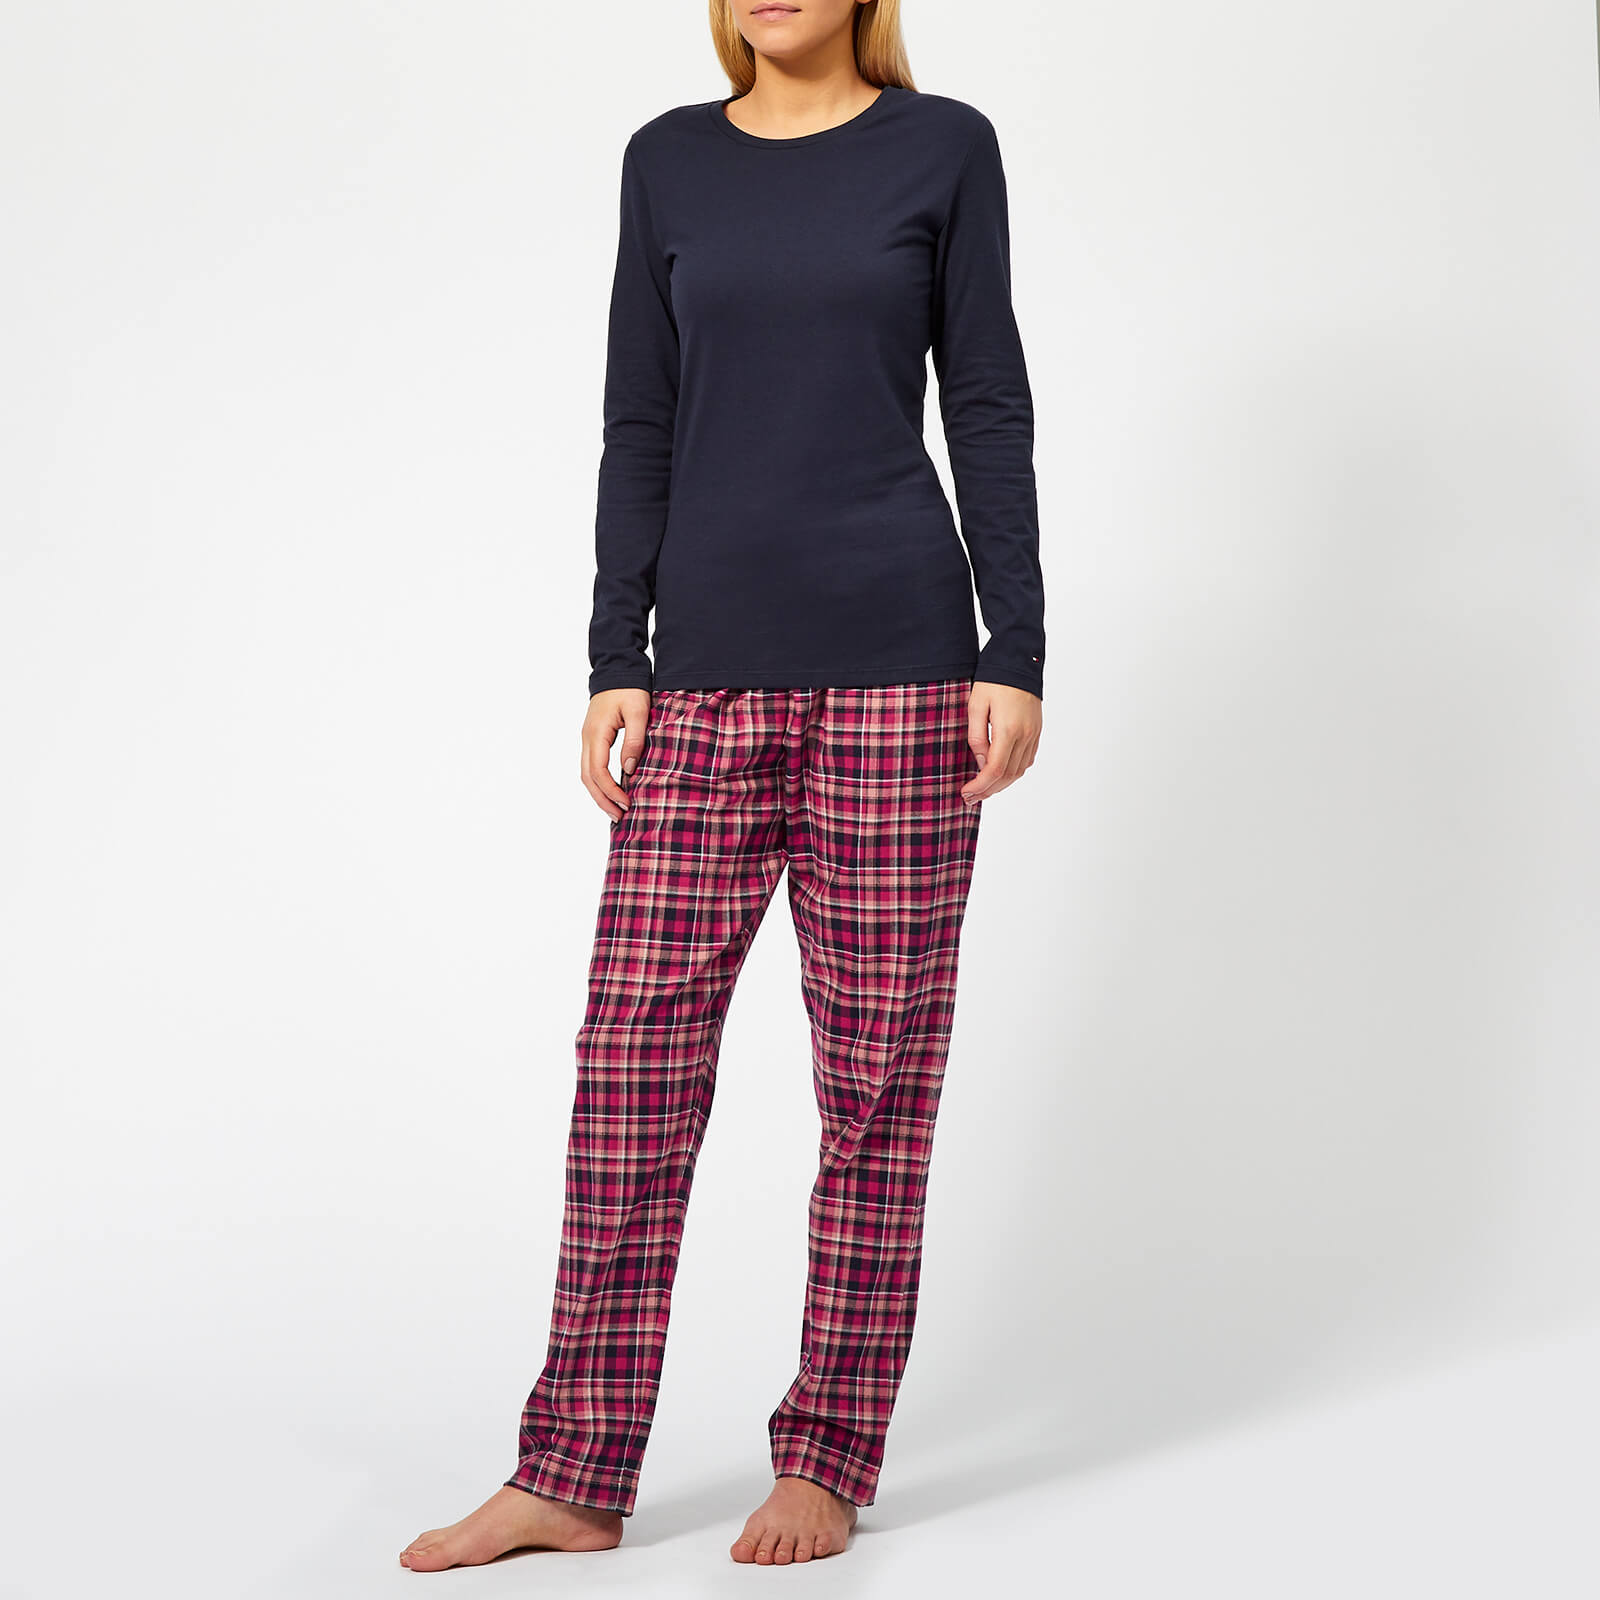 tommy hilfiger women's pajama set